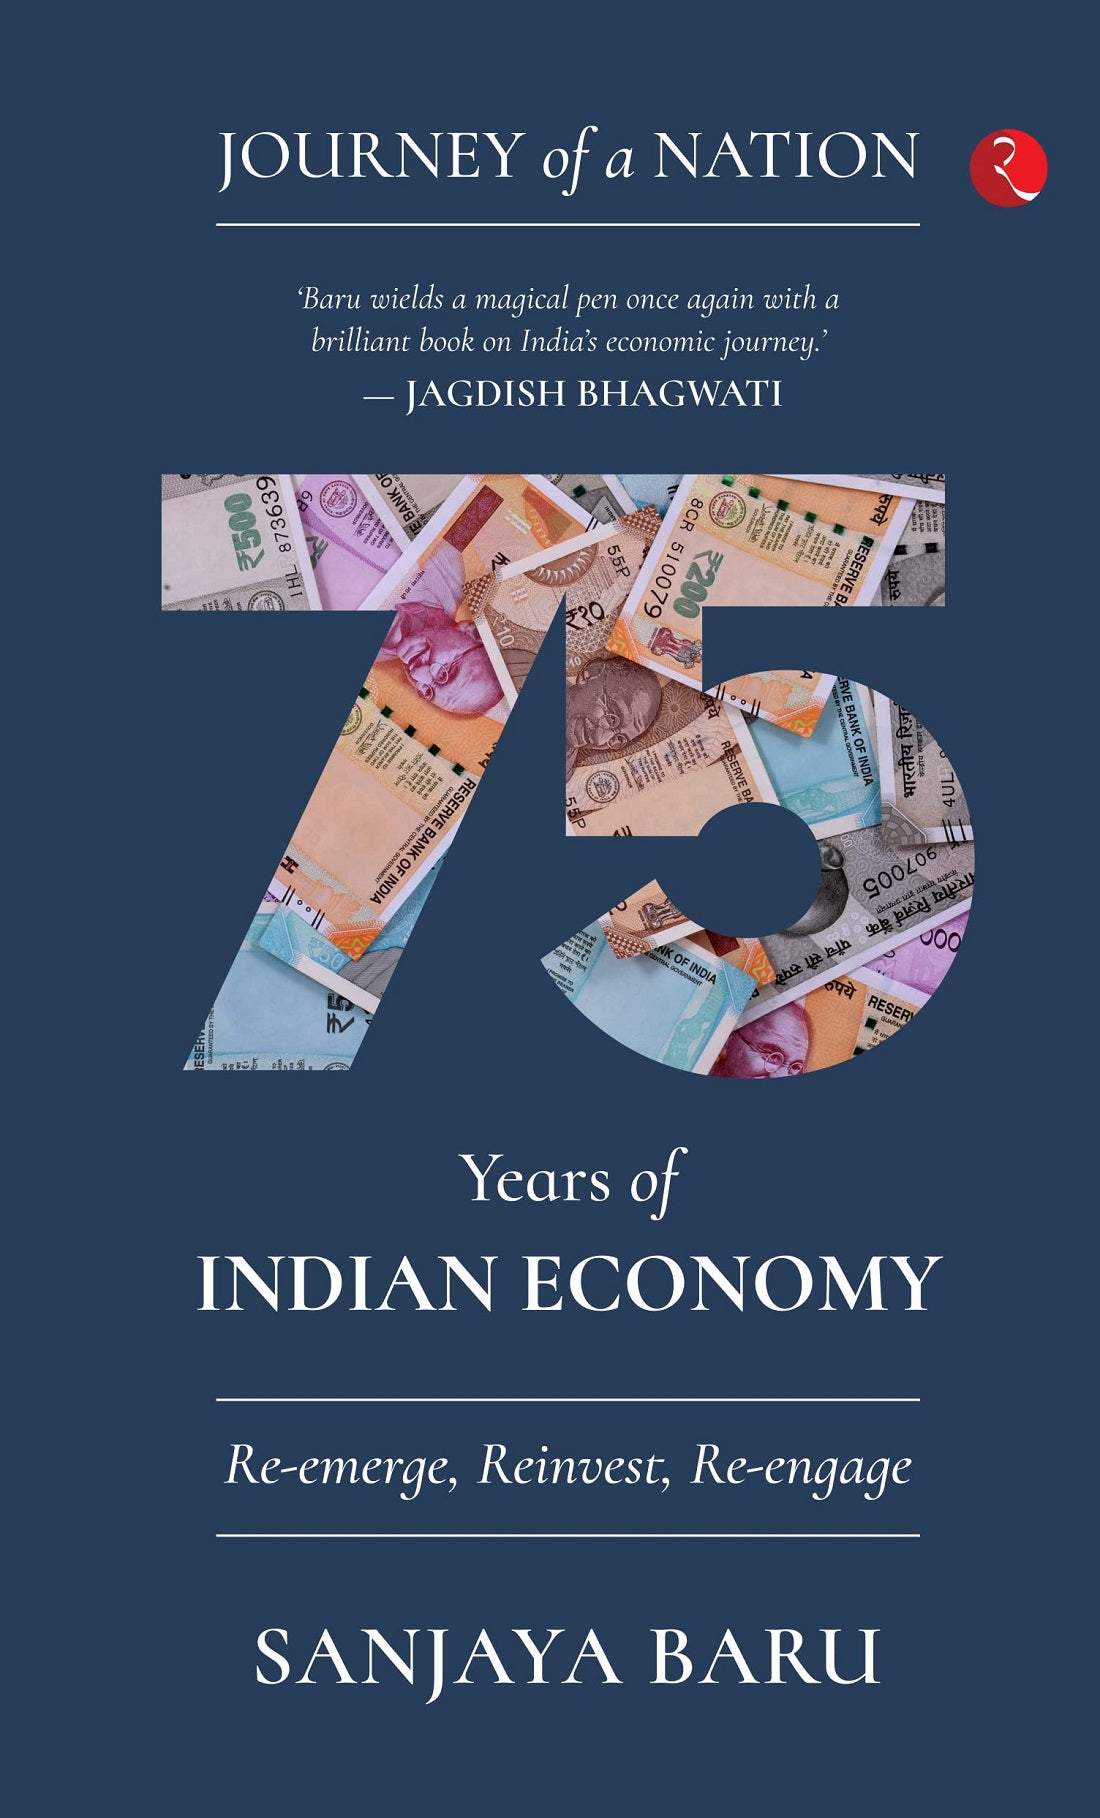 75 YEARS OF INDIAN ECONOMY